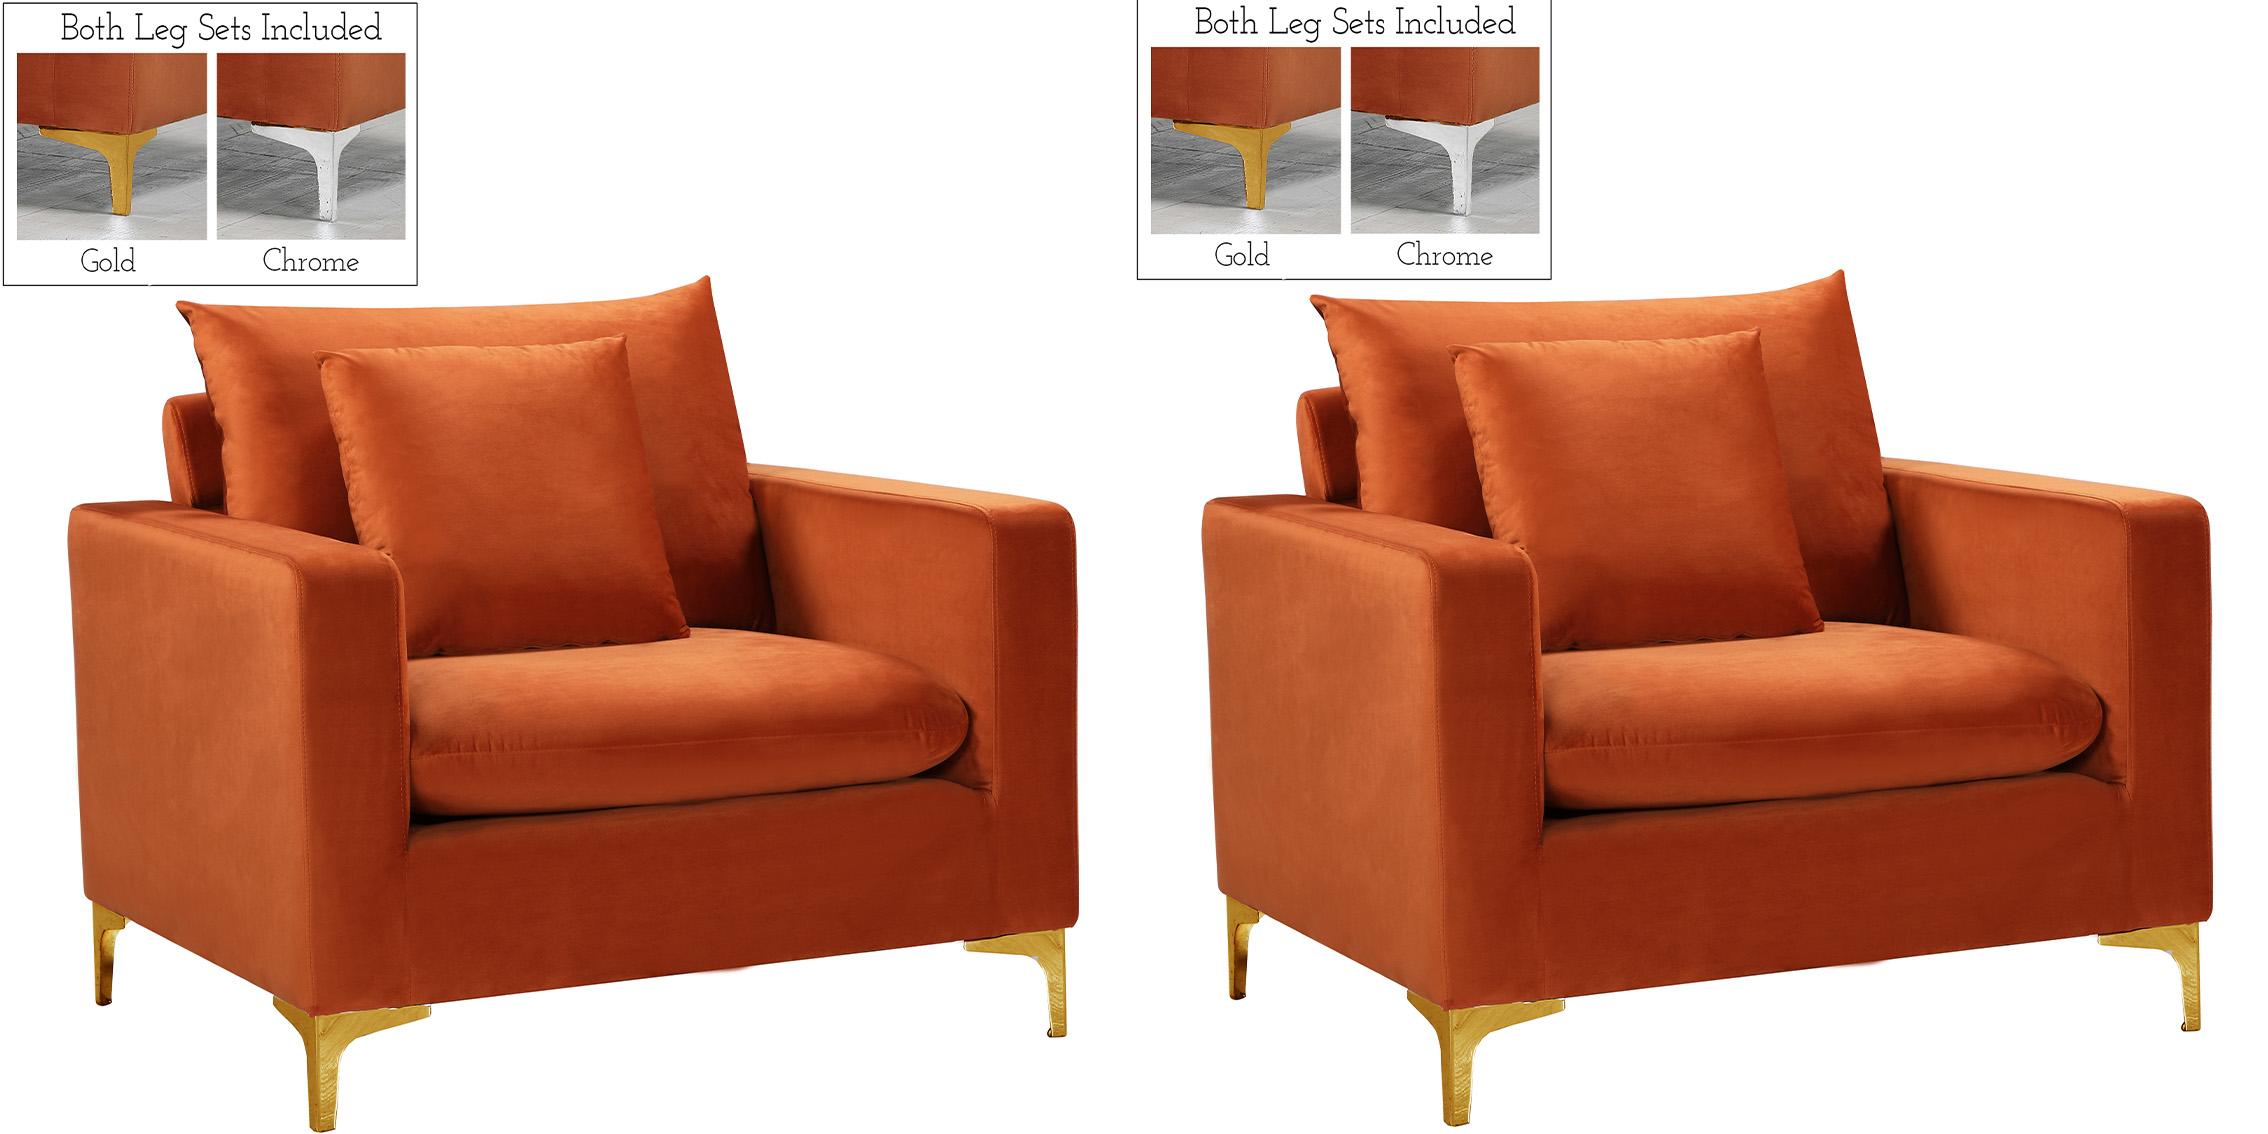 

    
633Cognac-C Meridian Furniture Arm Chair
